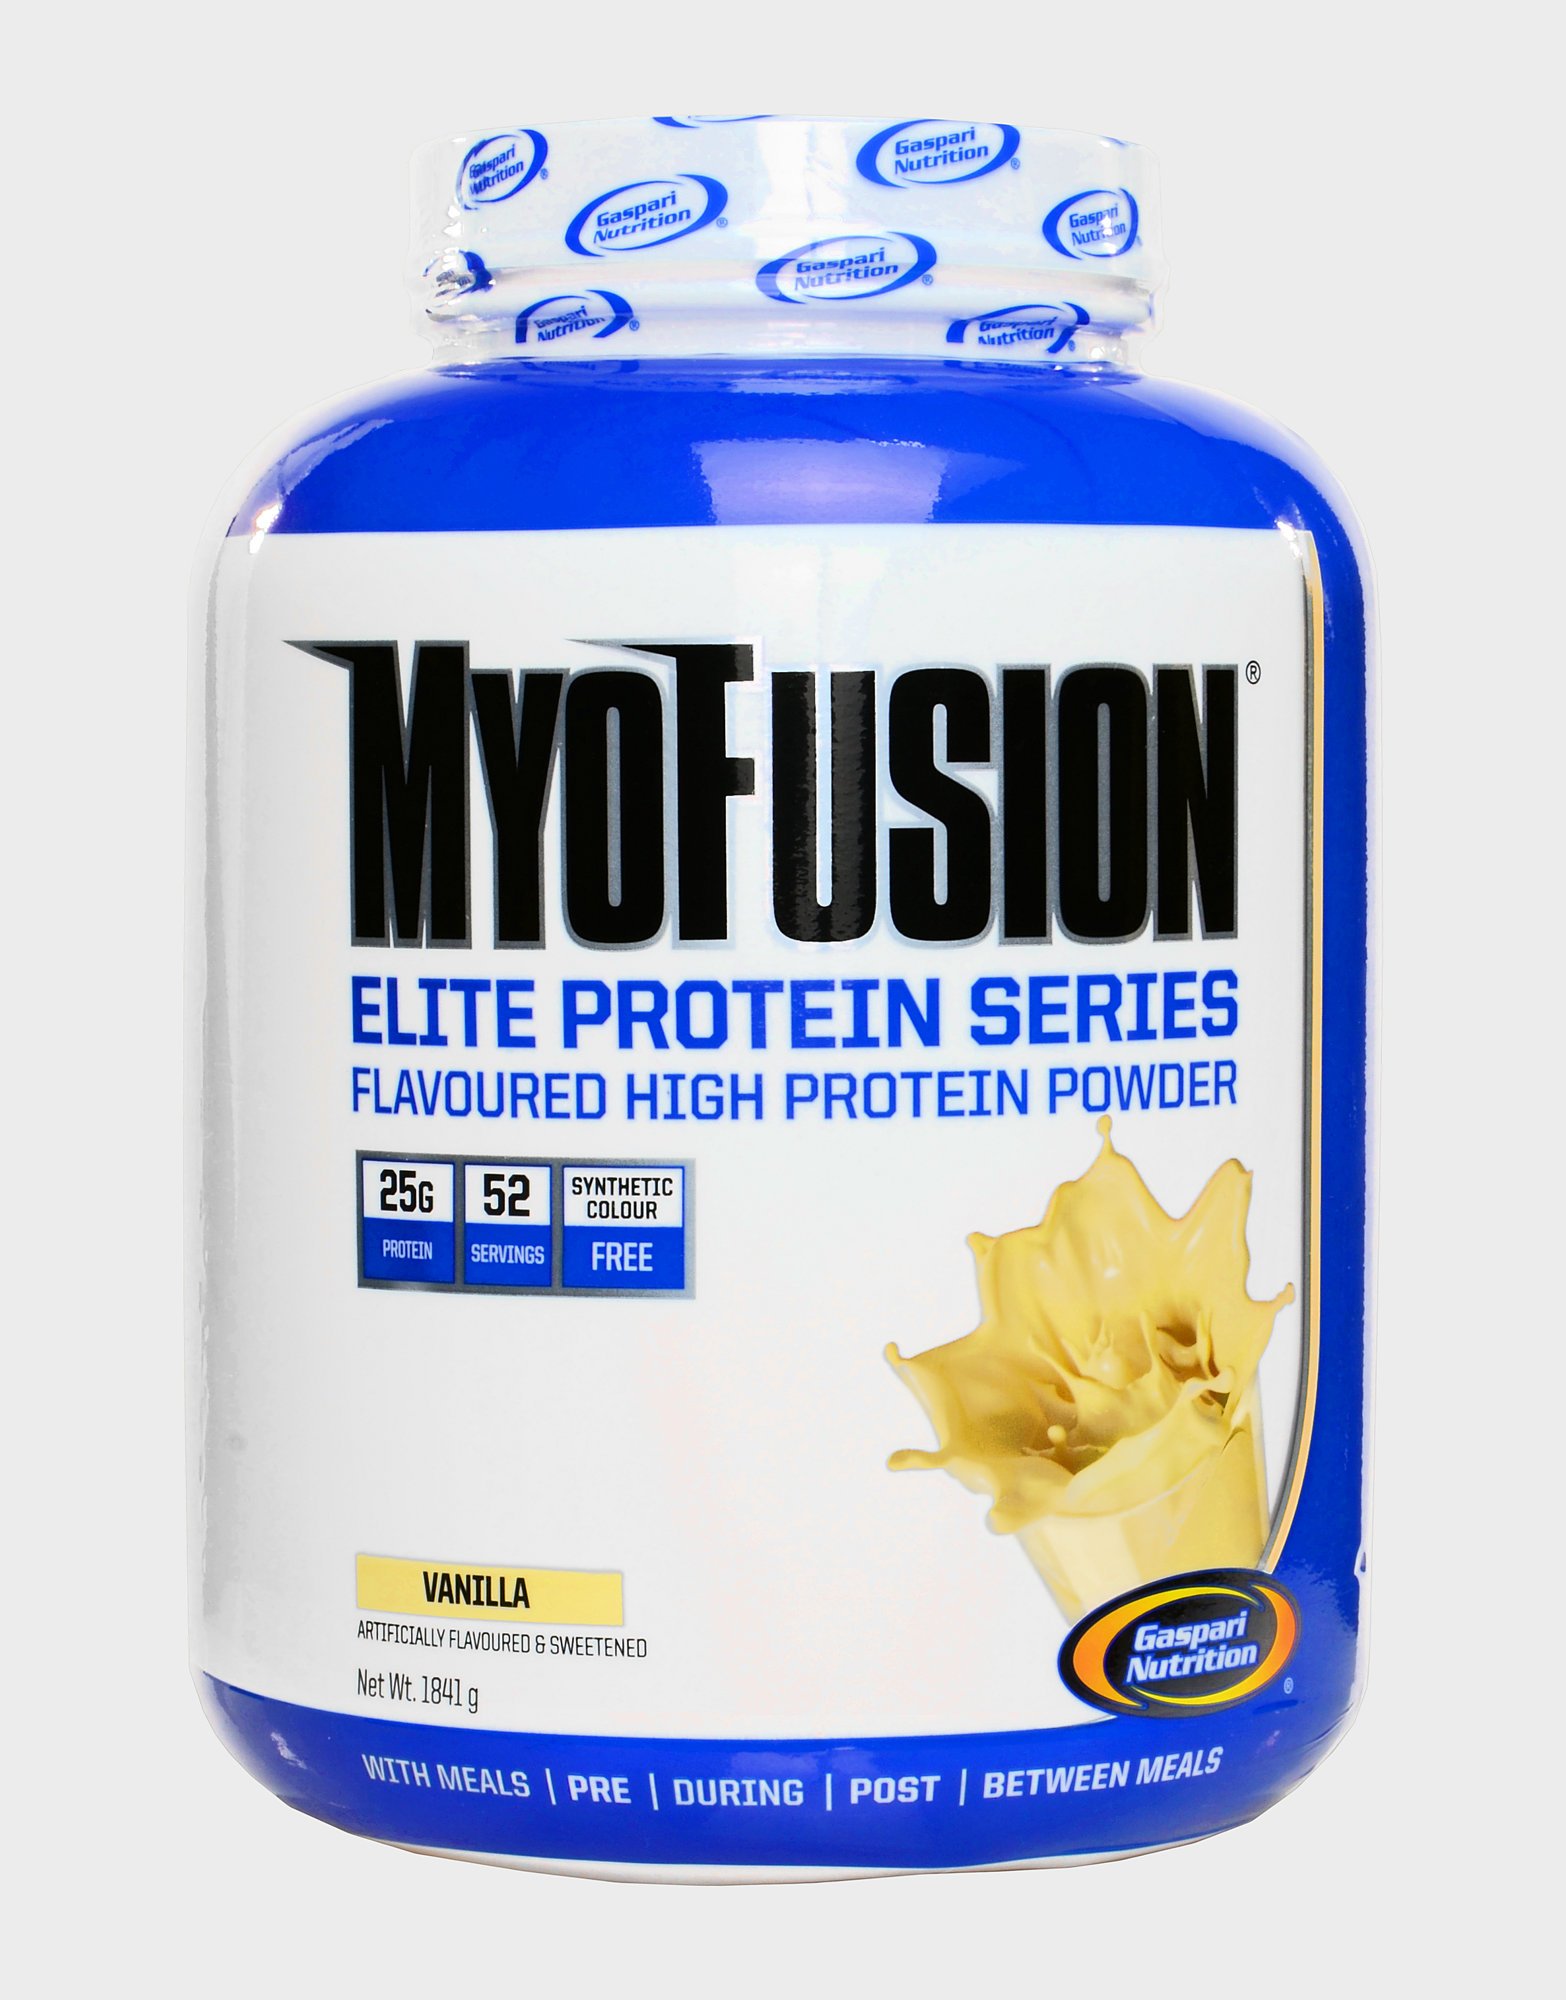 MyoFusion Elite Protein Series, 1814 г, Gaspari Nutrition. Комплексный протеин. 